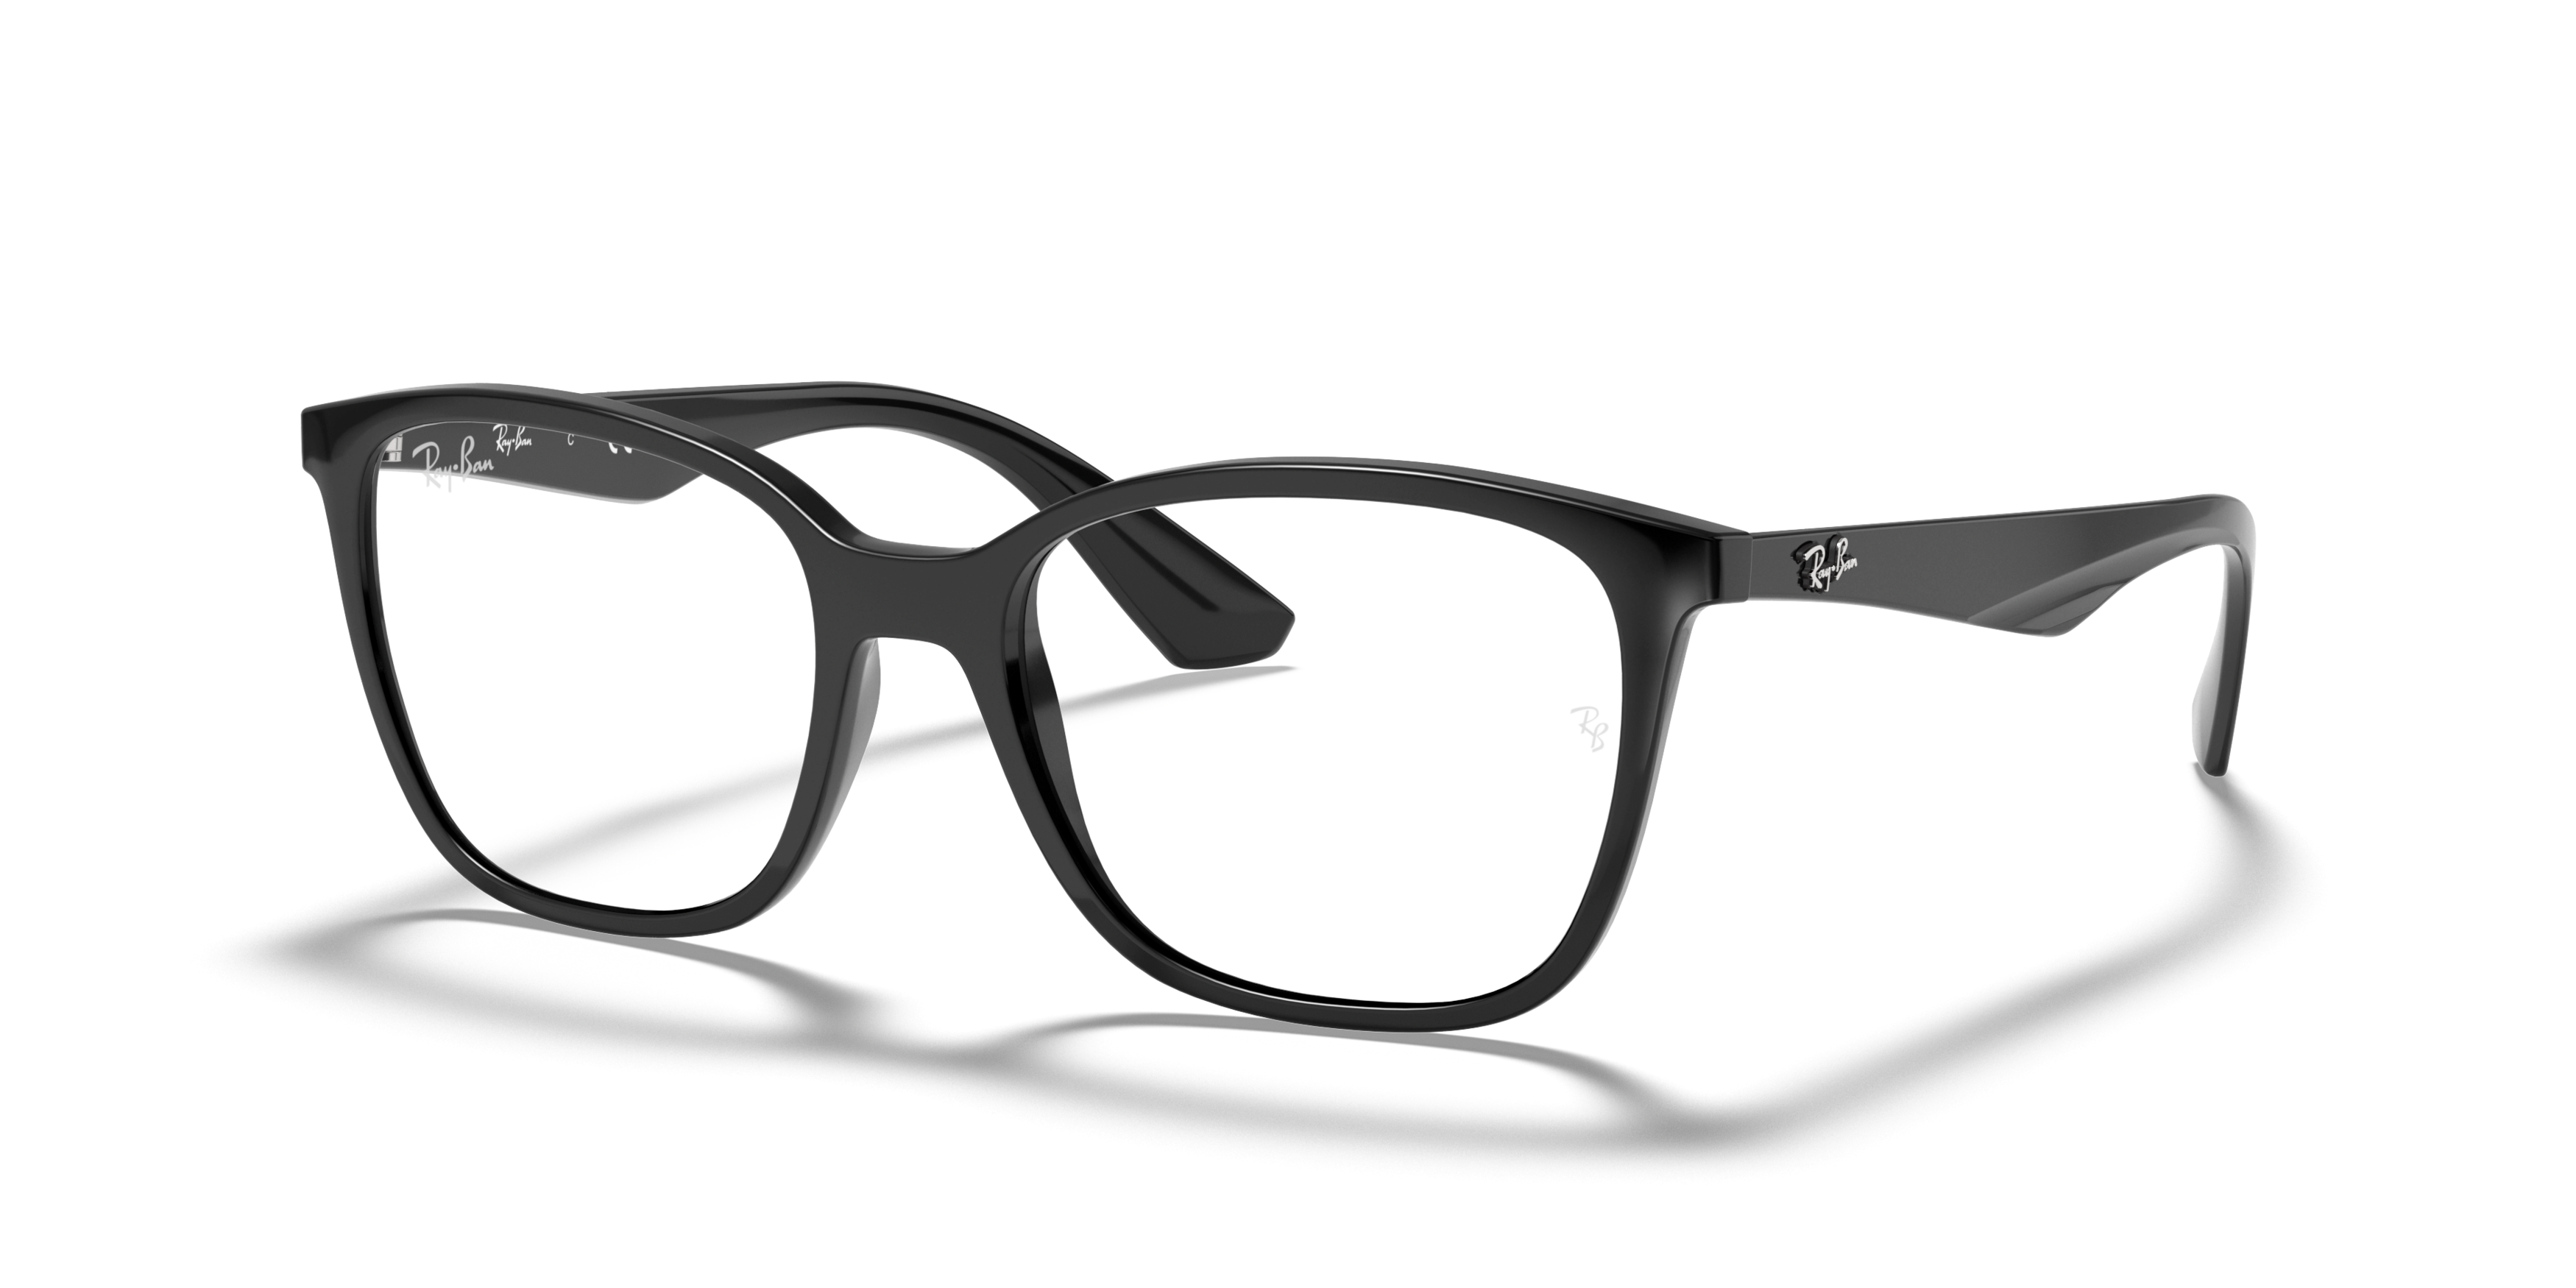 Angle_Left01 Ray-Ban RX 7066 (2000) Glasses Transparent / Black